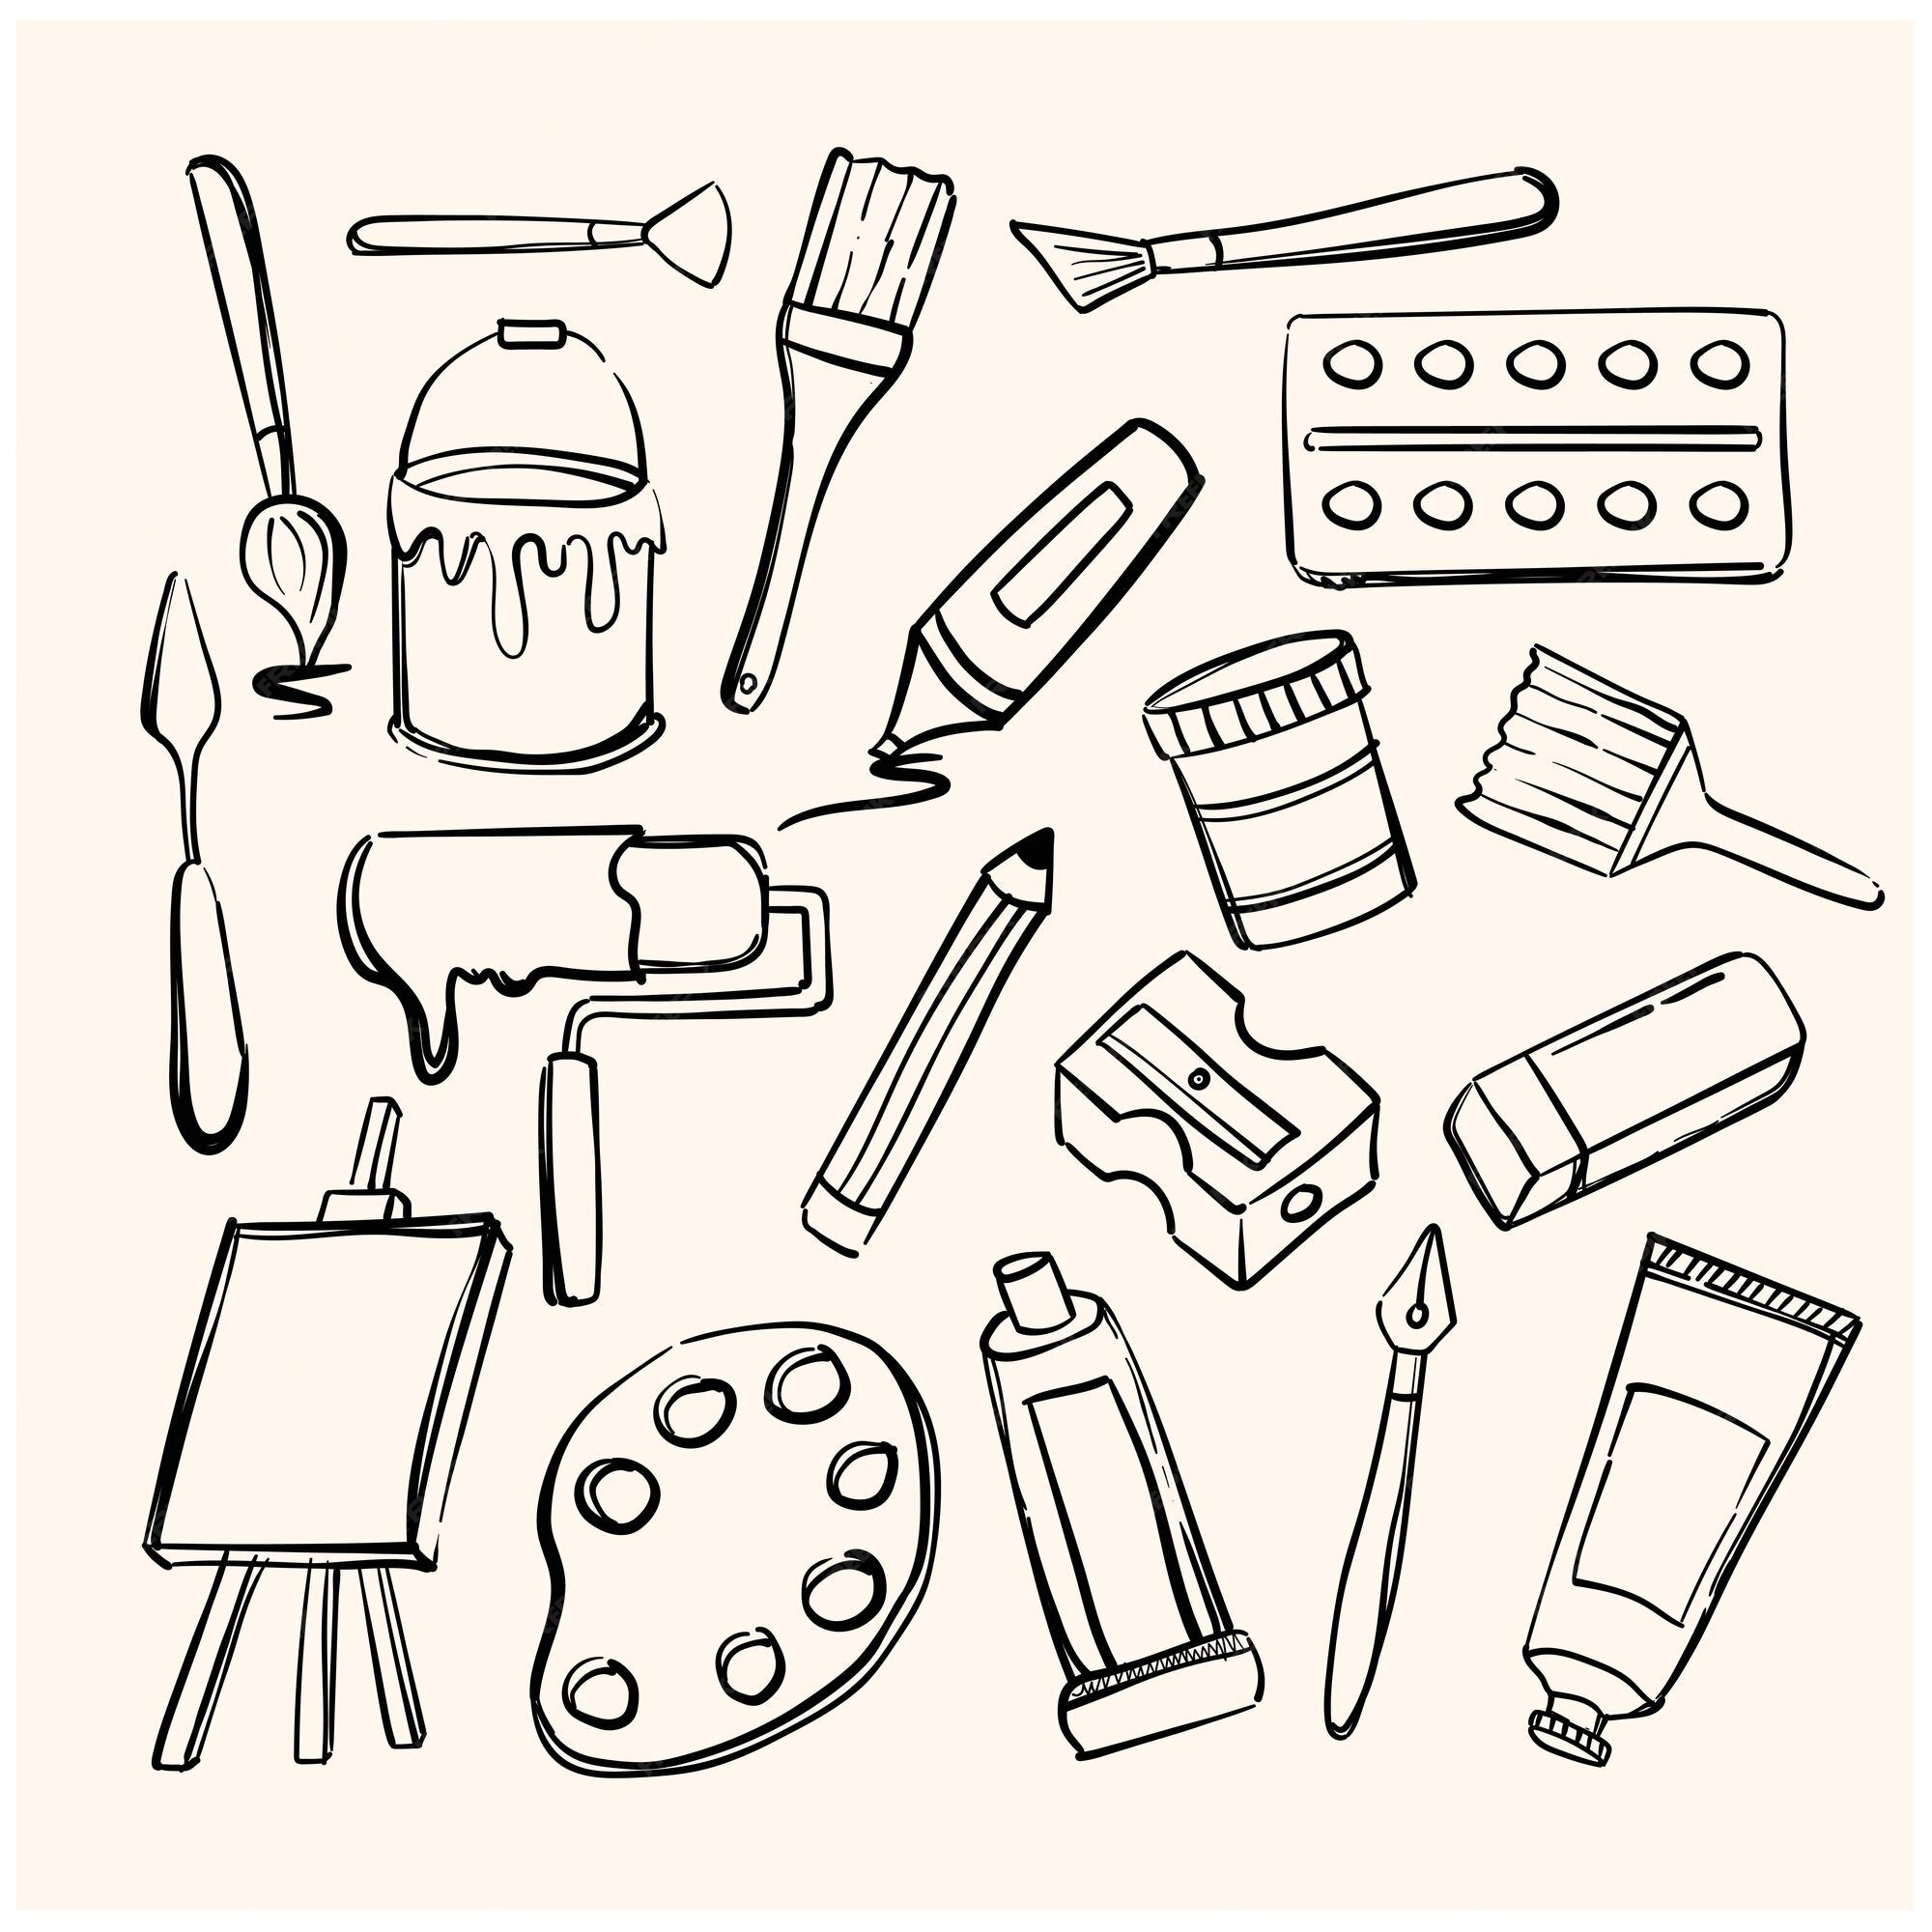 https://img.freepik.com/premium-vector/hand-drawn-set-artist-tools-doodle-art-supplies-sketch-style-easel-brushes-paint-pencils_409898-569.jpg?w=2000